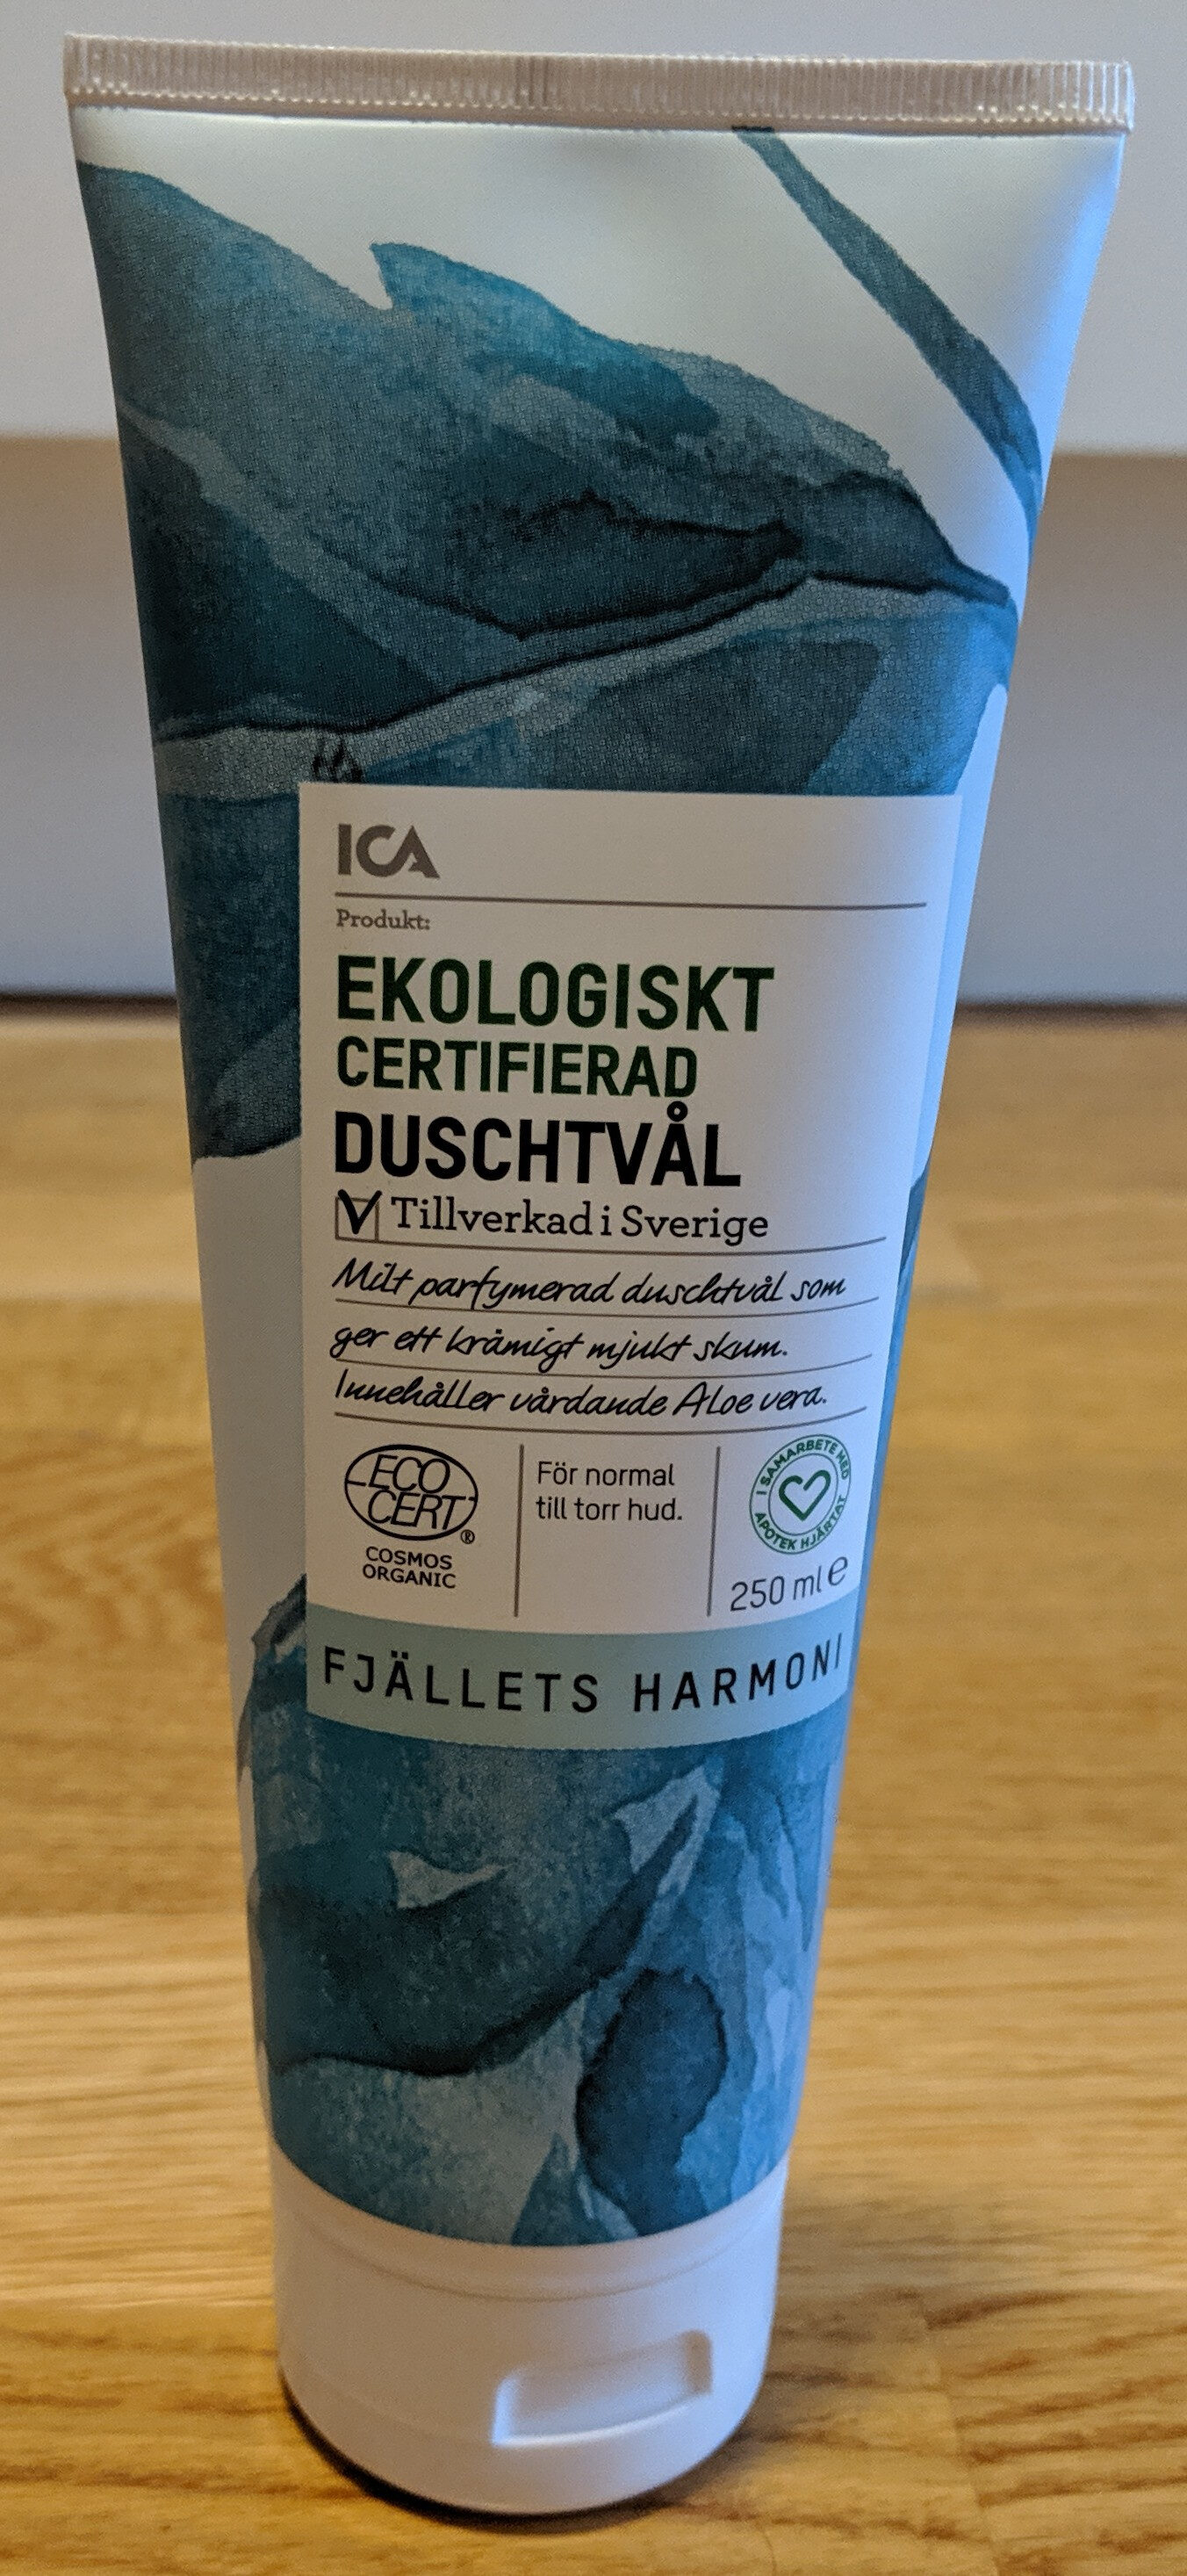 Ekologisk Certifierad Duschtvål Fjällets Harmoni - Product - sv